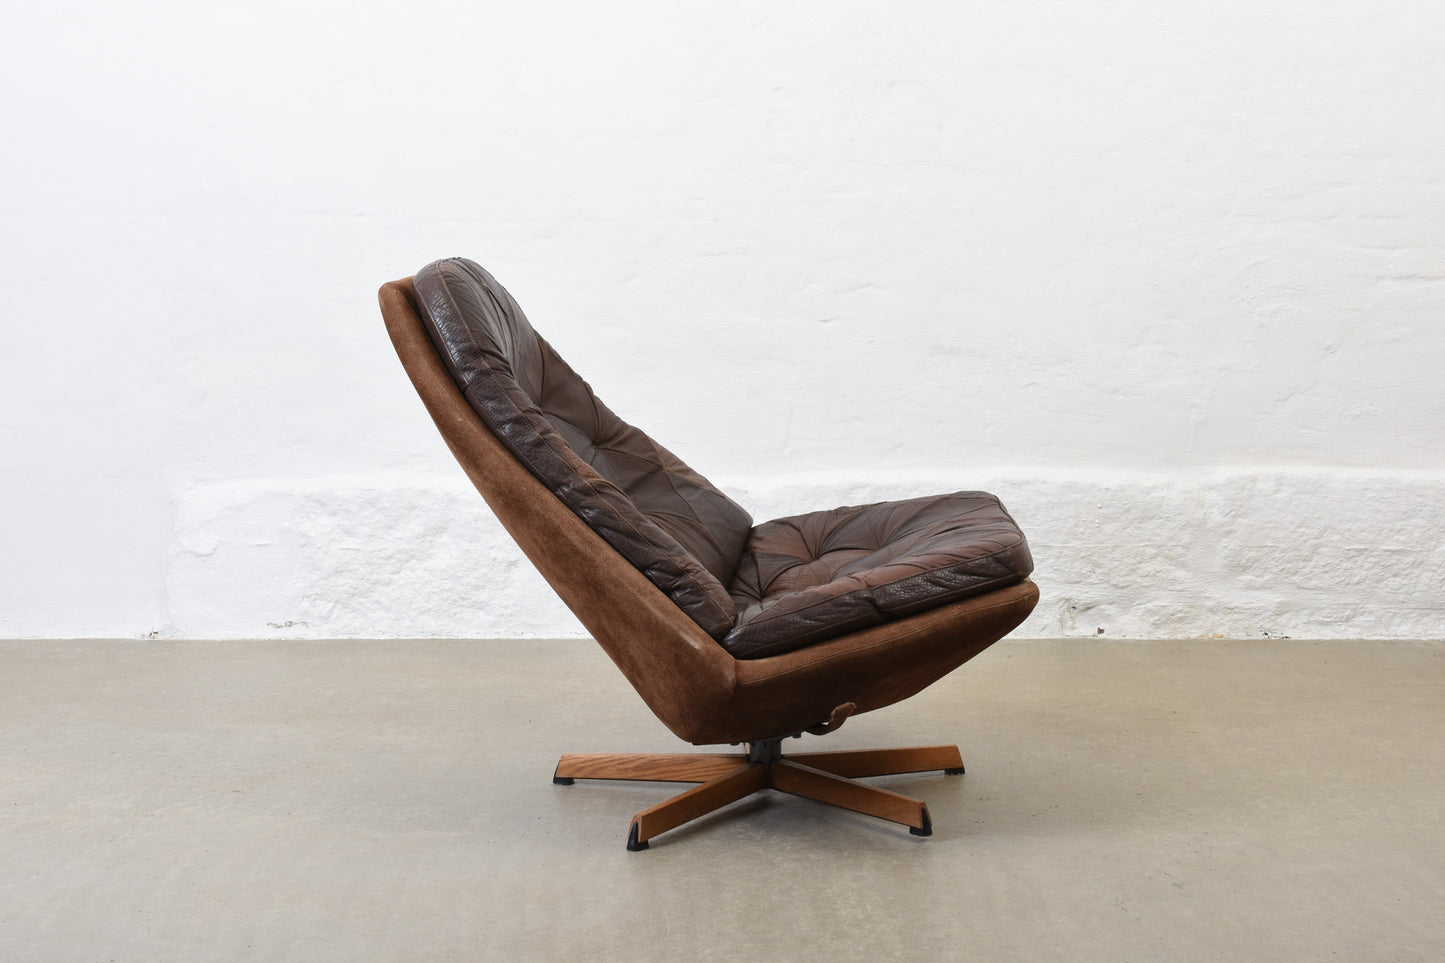 1960s reclining lounger by Madsen & Schubell